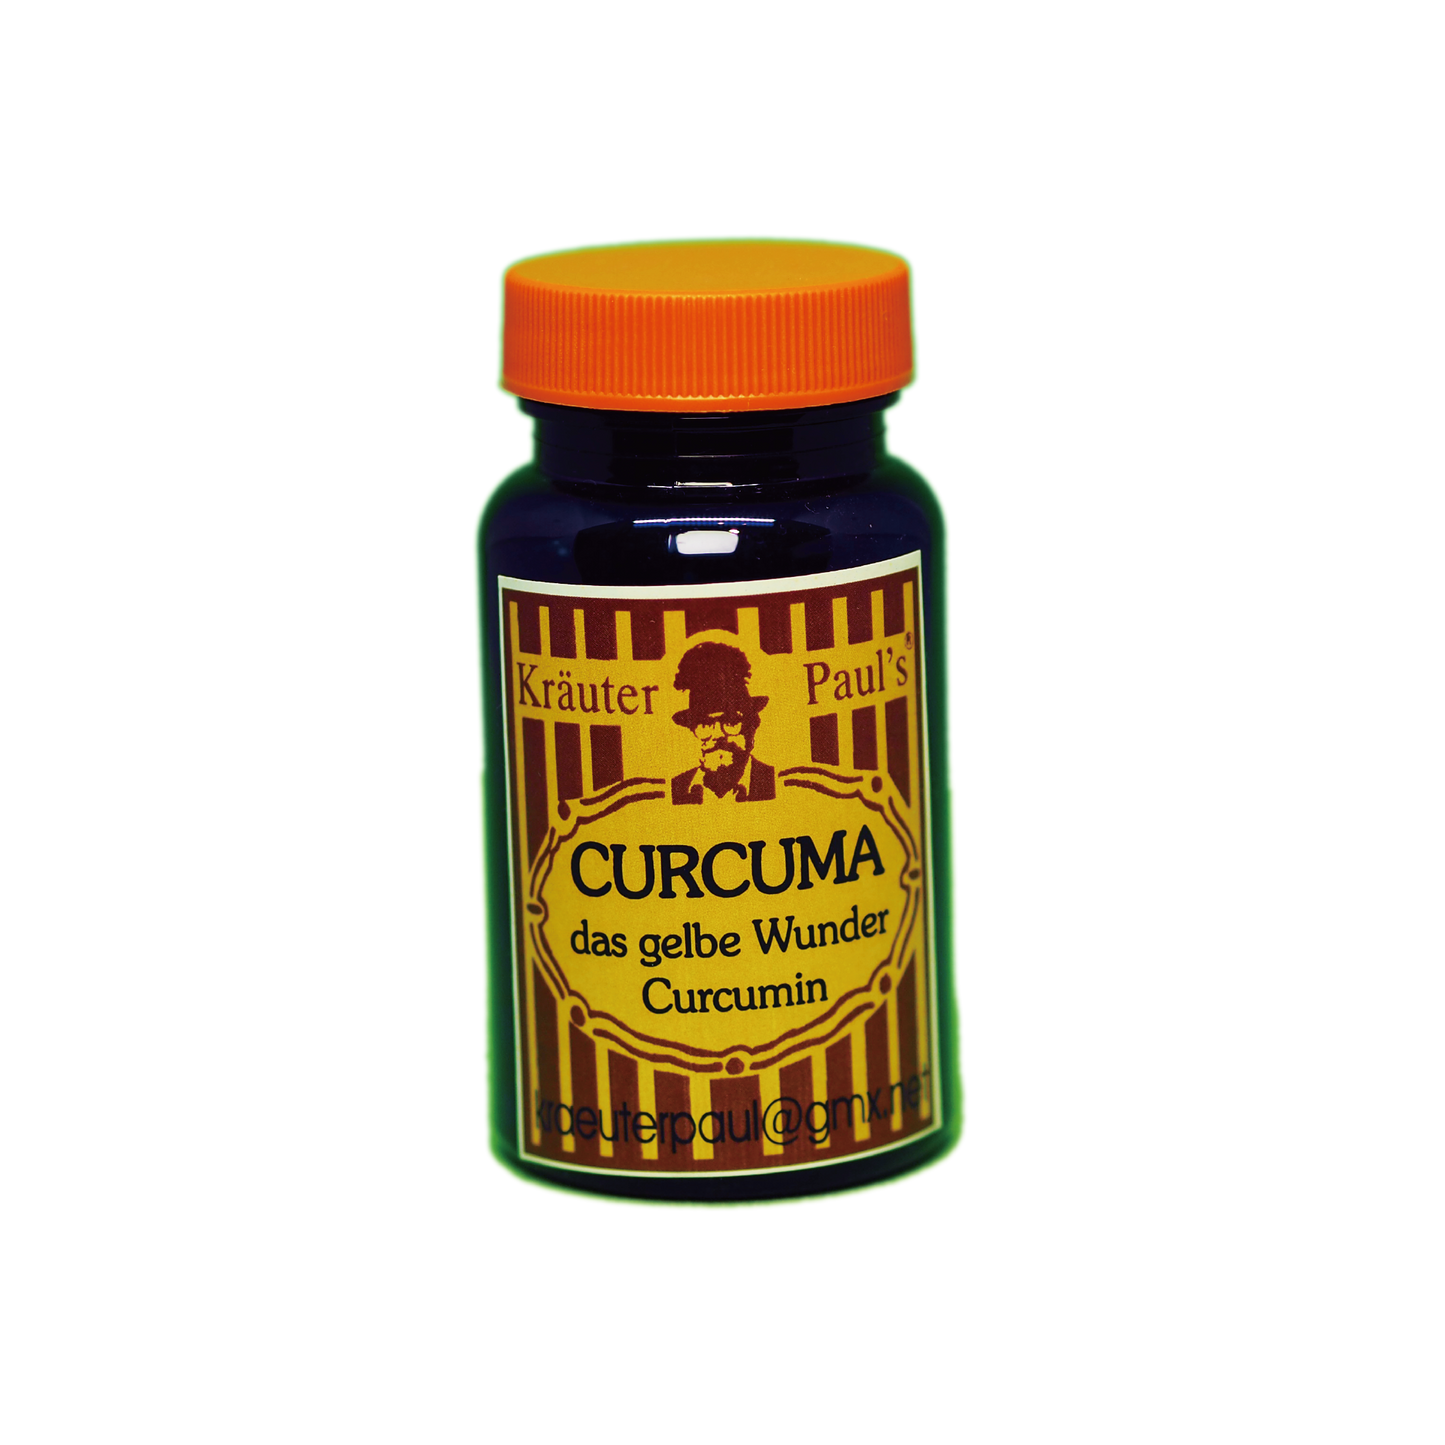 Curcuma - Das gelbe Wunder Curcumin